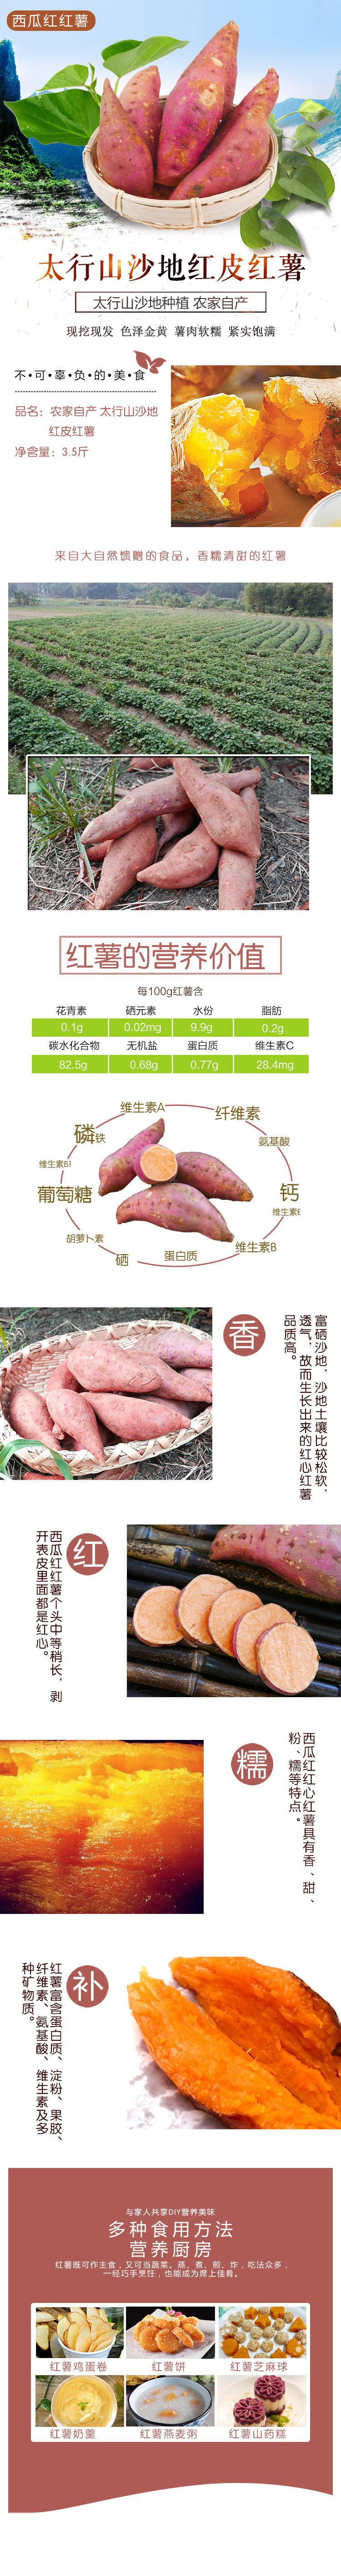 S919农家自产 红薯太行山沙地红皮红心西瓜红 红薯3.5斤 新鲜现挖小香薯板栗红薯迷你小地瓜